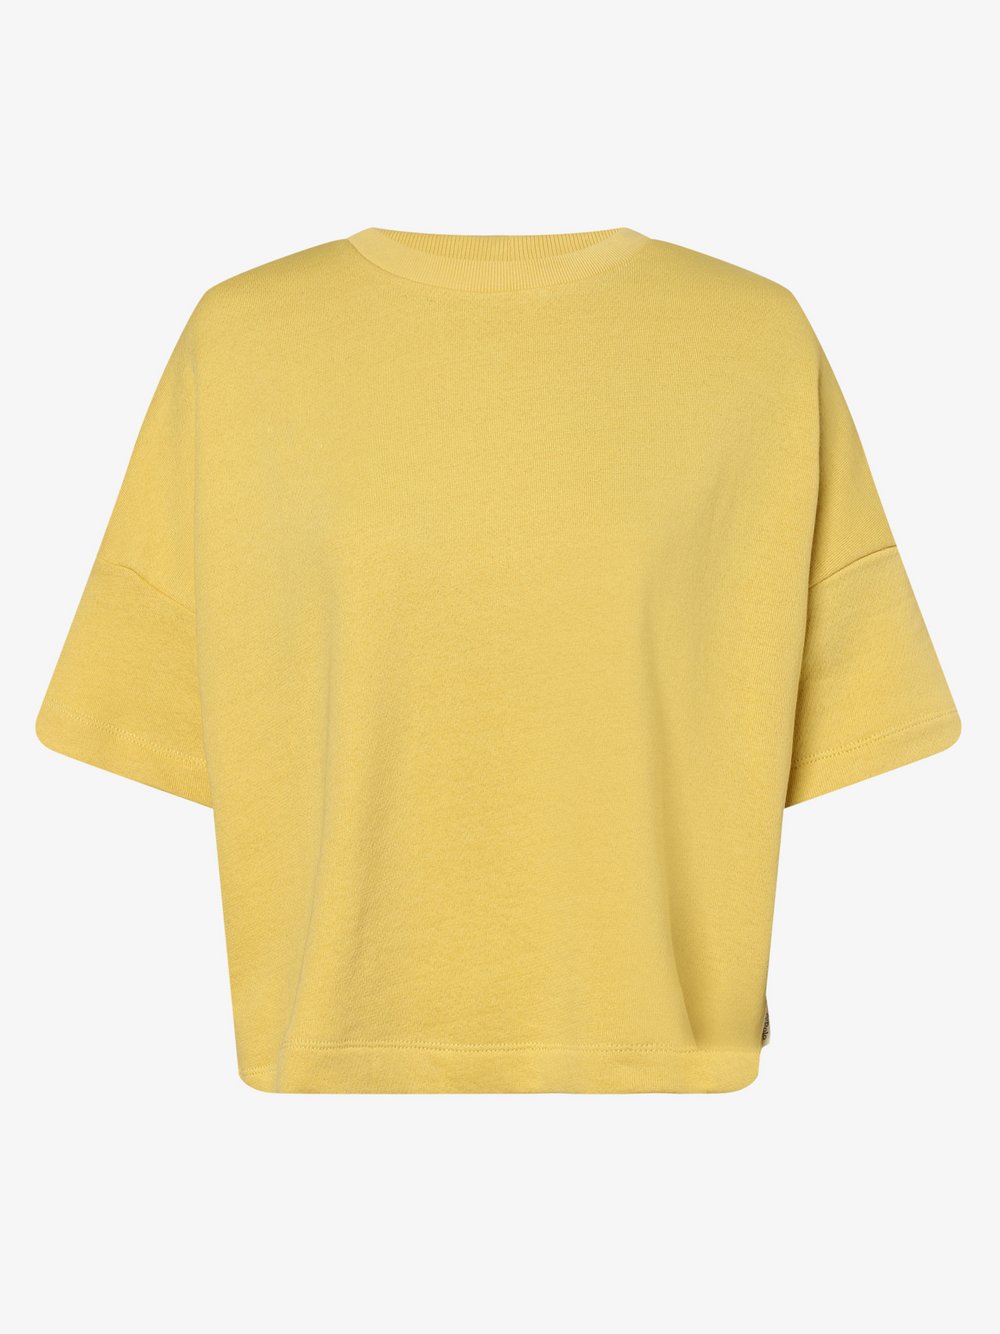 Marc O'Polo - Damska bluza nierozpinana, żółty